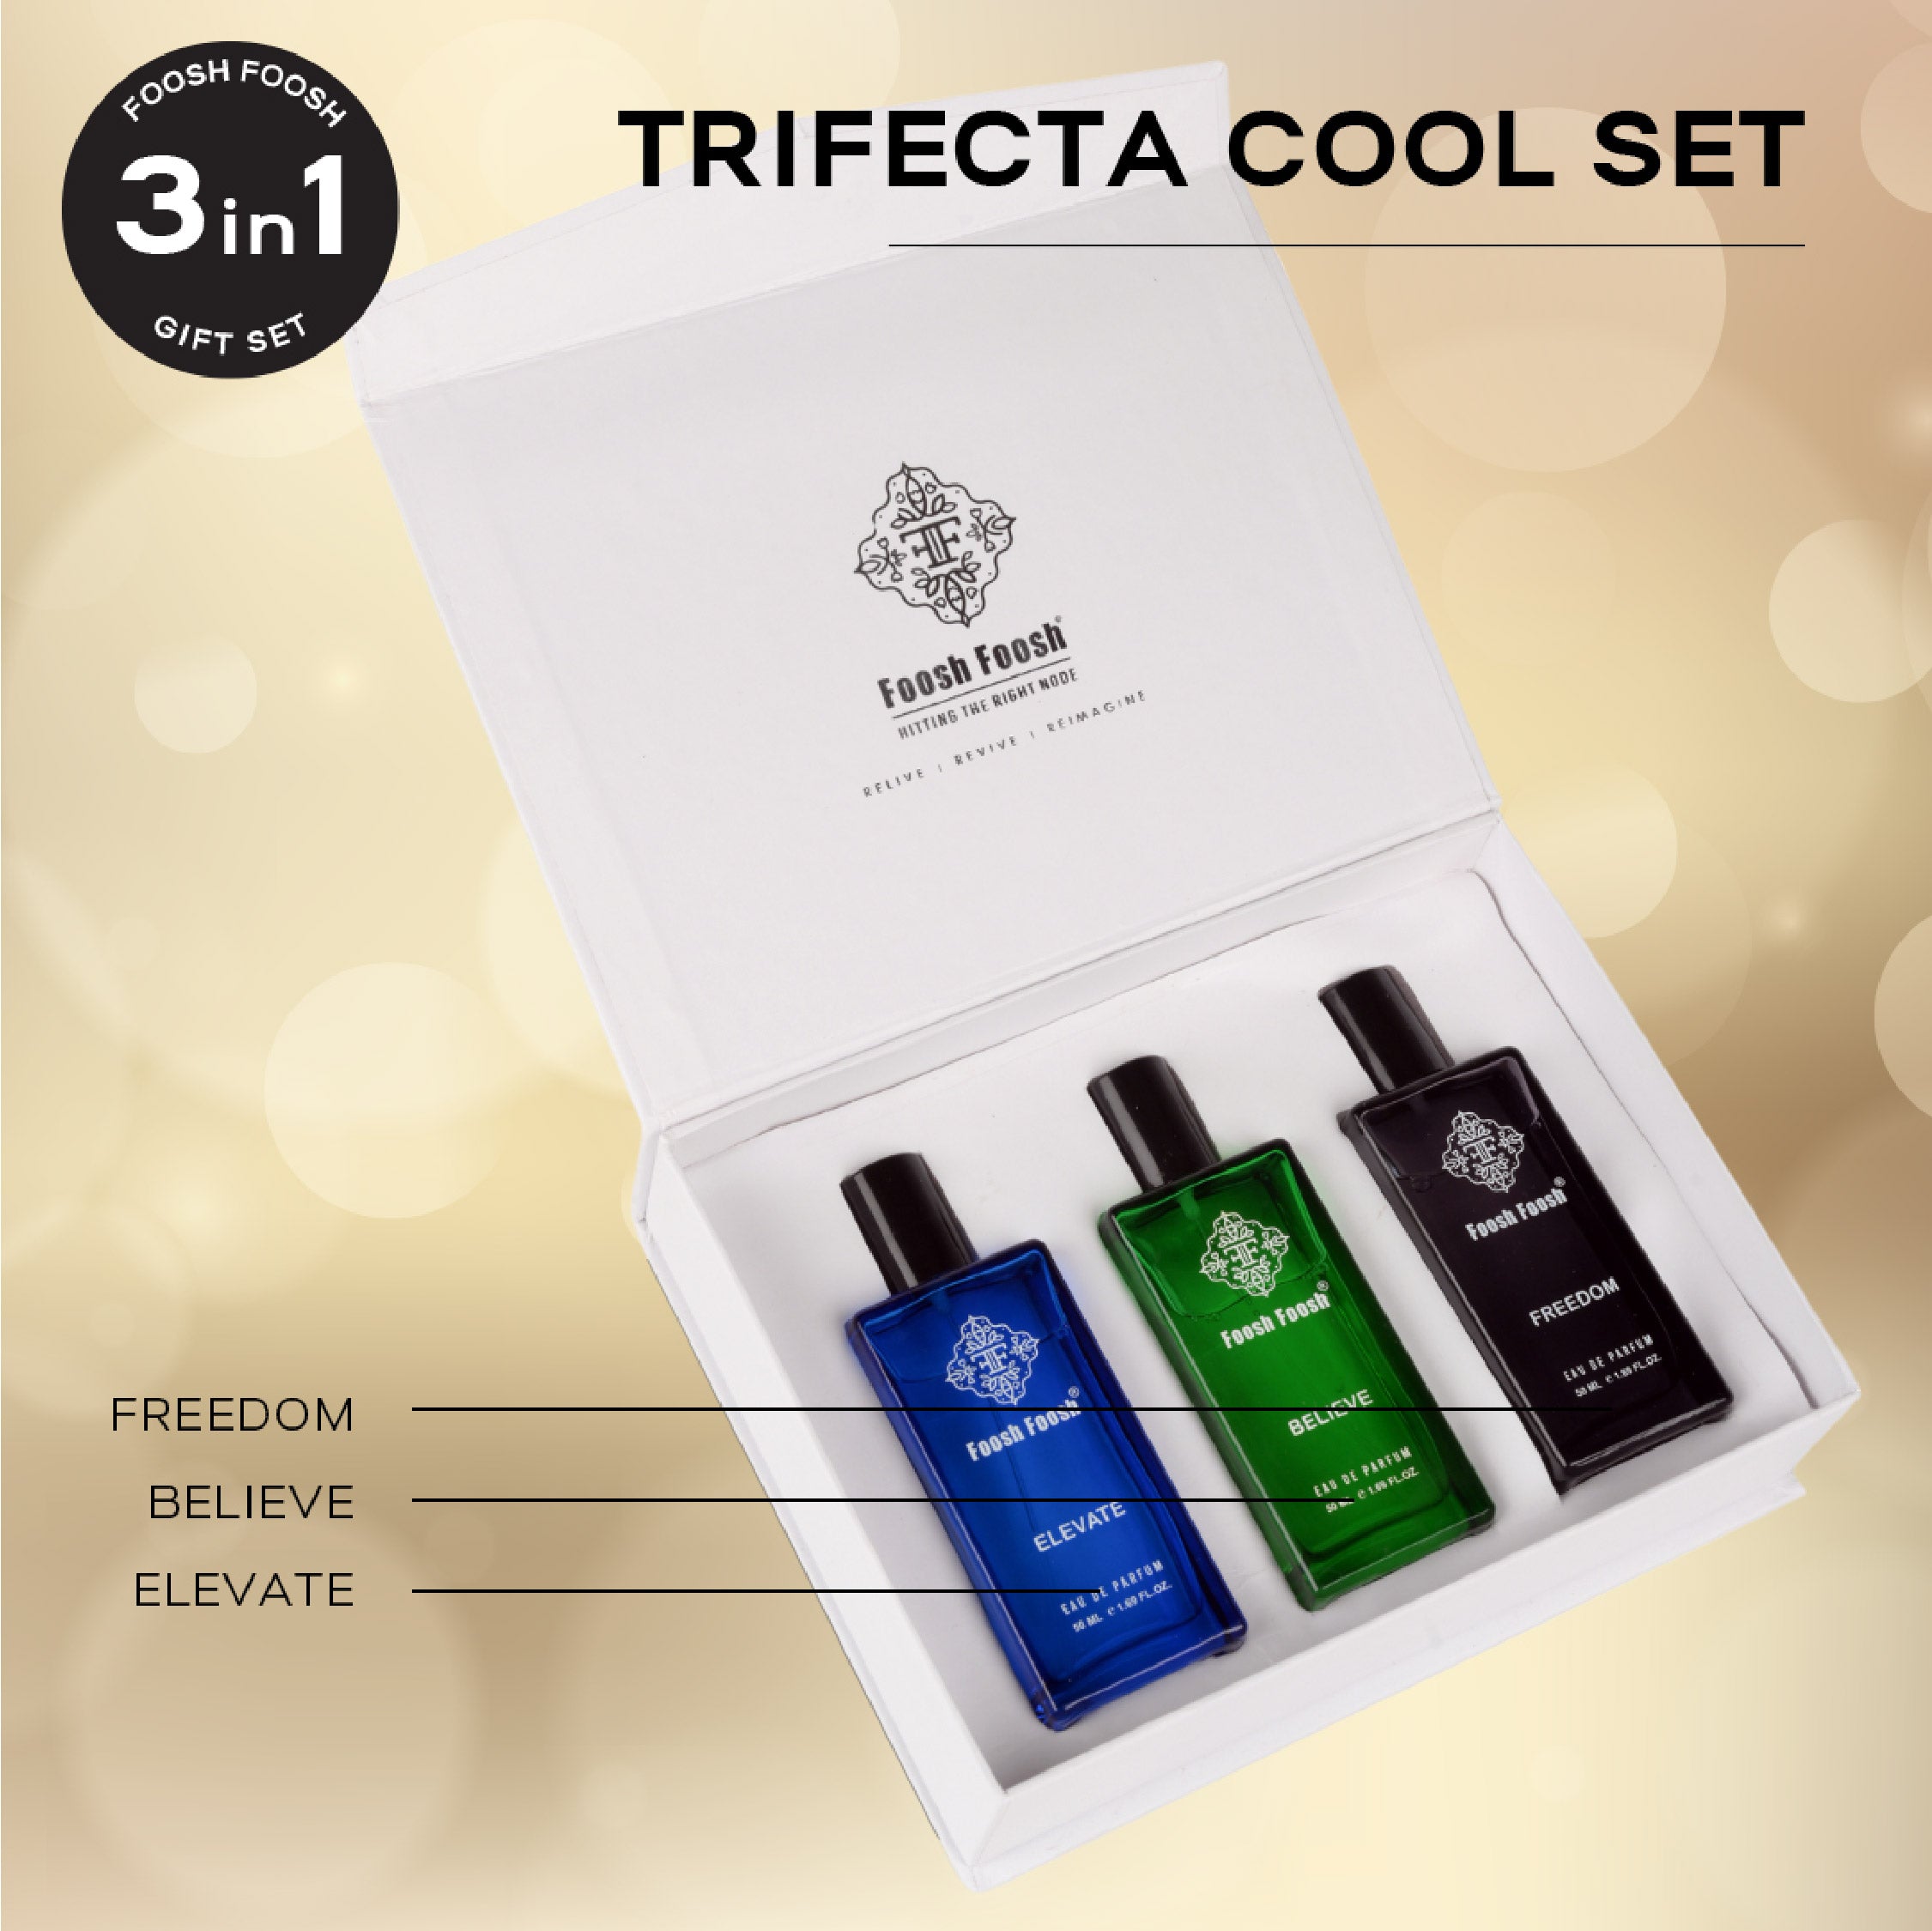 Trifecta Cool Set